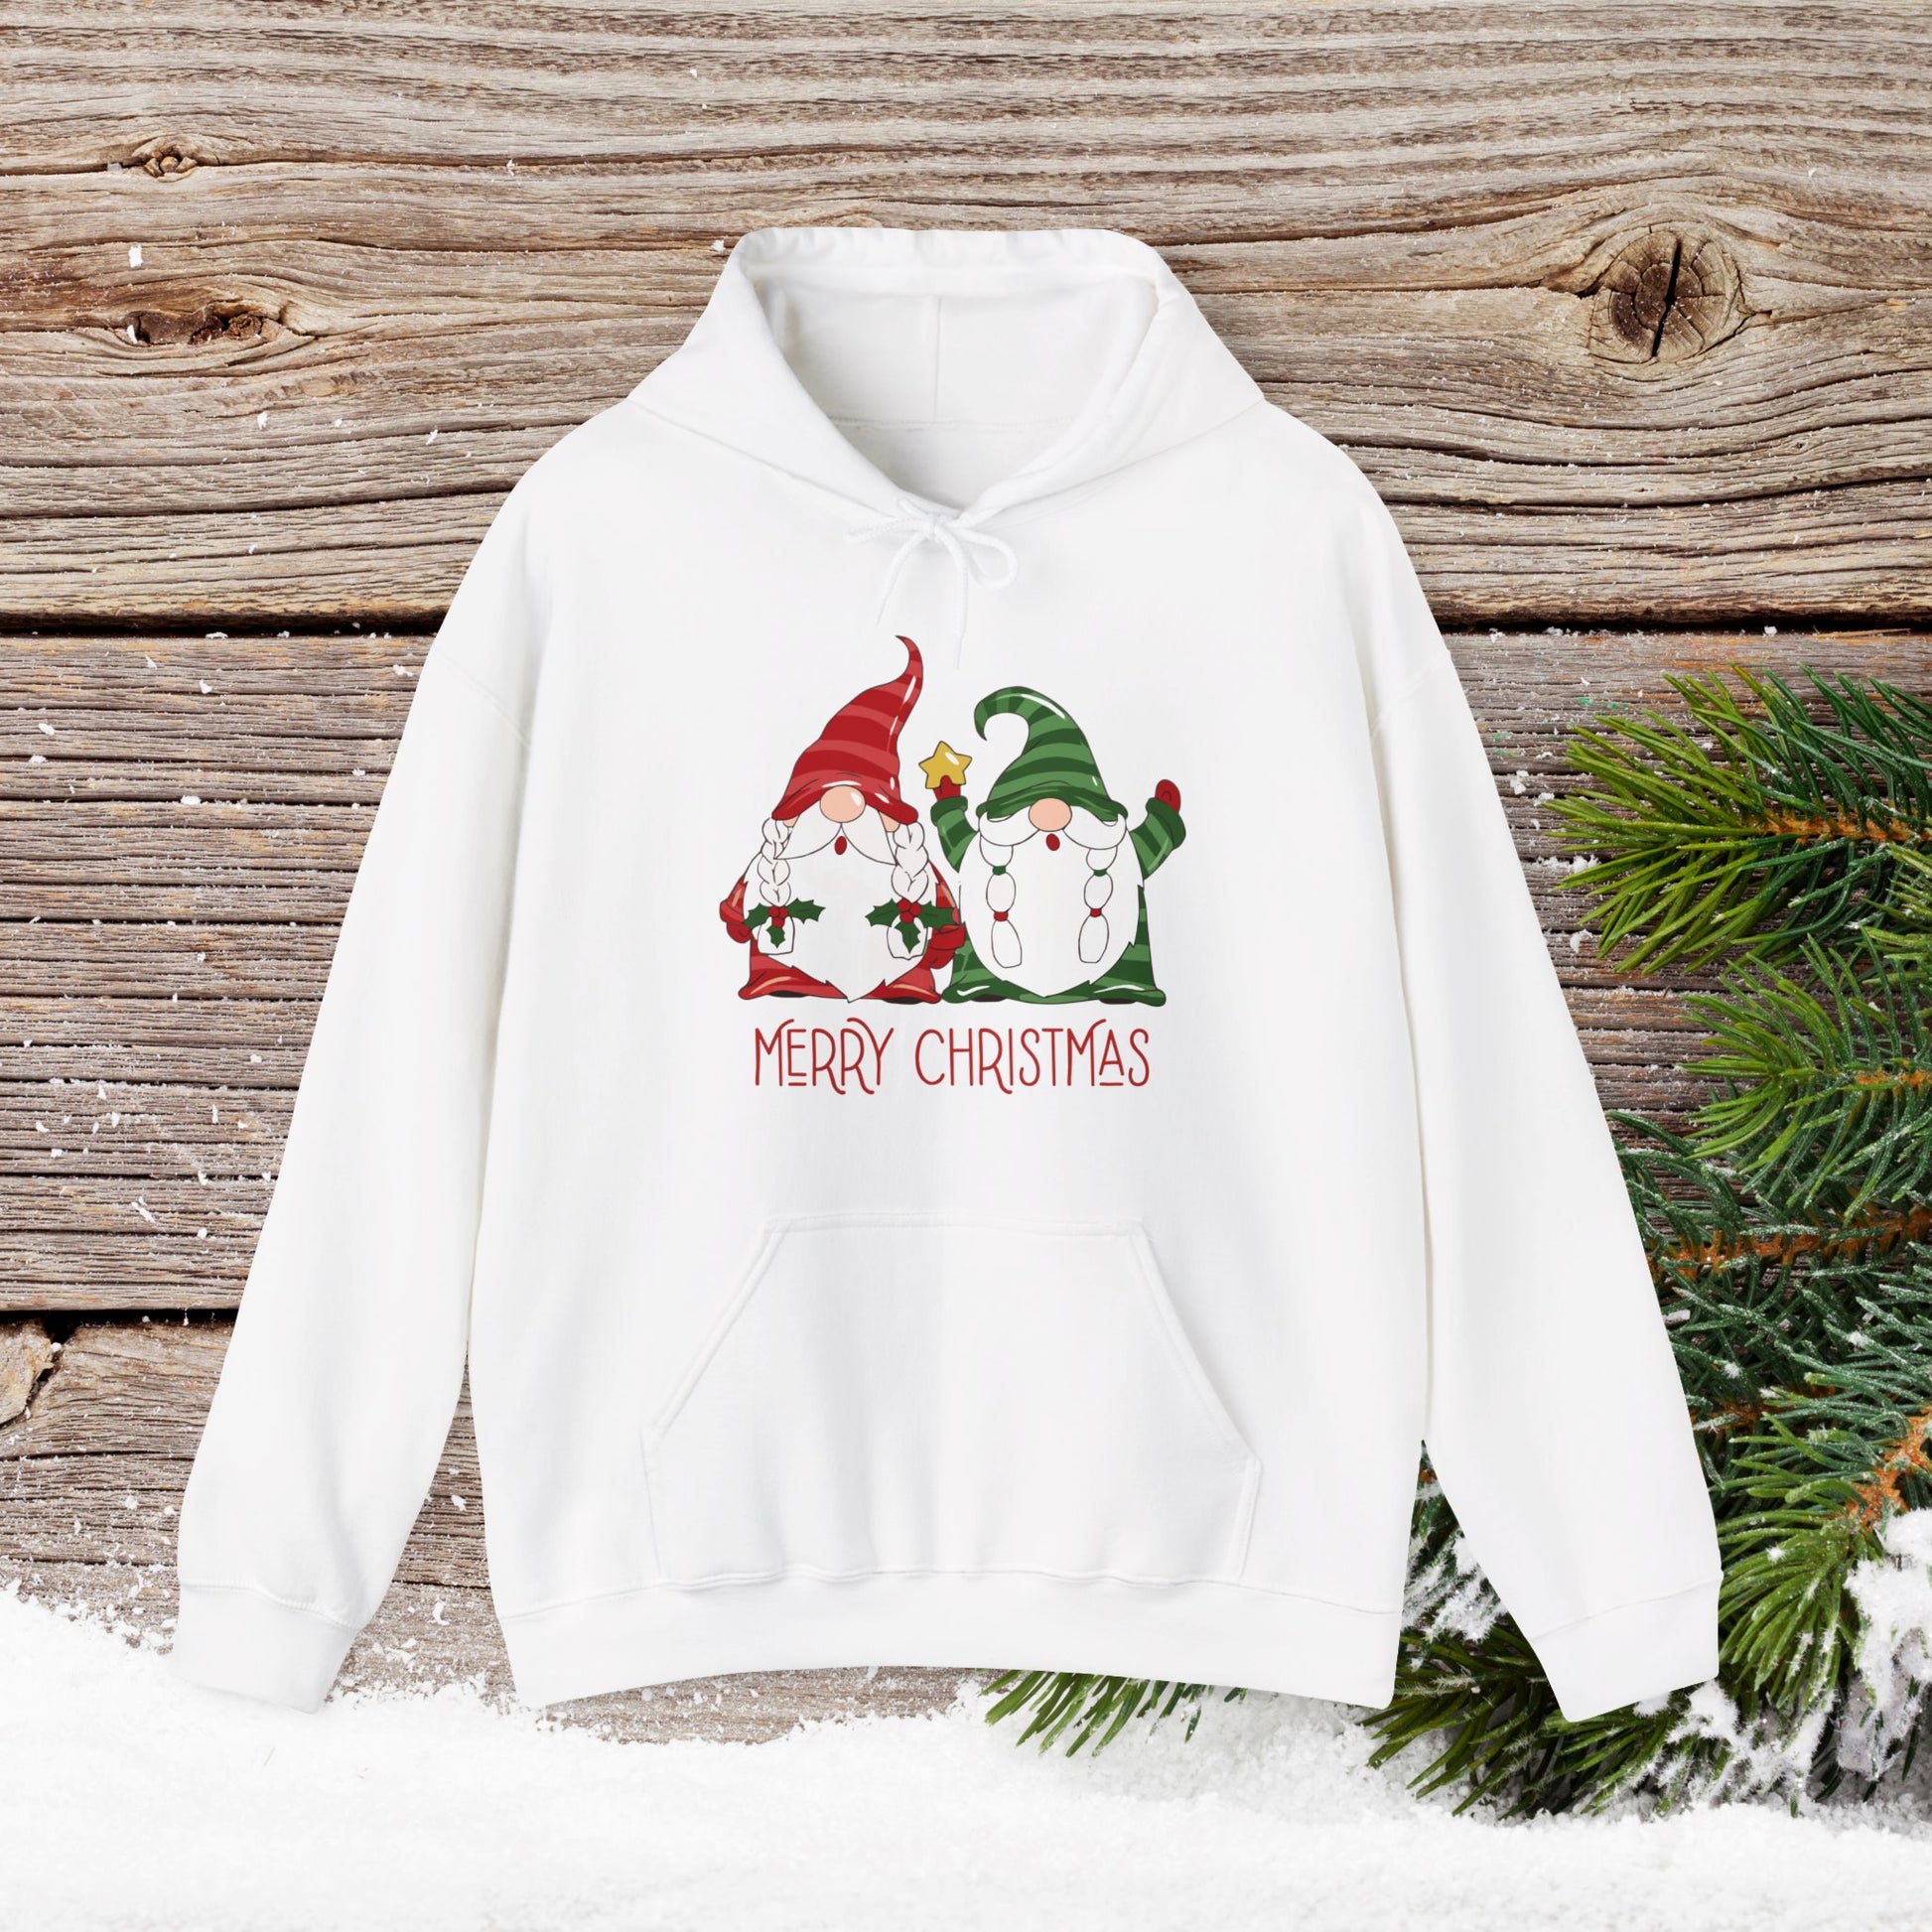 Christmas Hoodie - Gnome Merry Christmas - Cute Christmas Shirts - Youth and Adult Christmas Hooded Sweatshirt Hooded Sweatshirt Graphic Avenue White Adult Small 